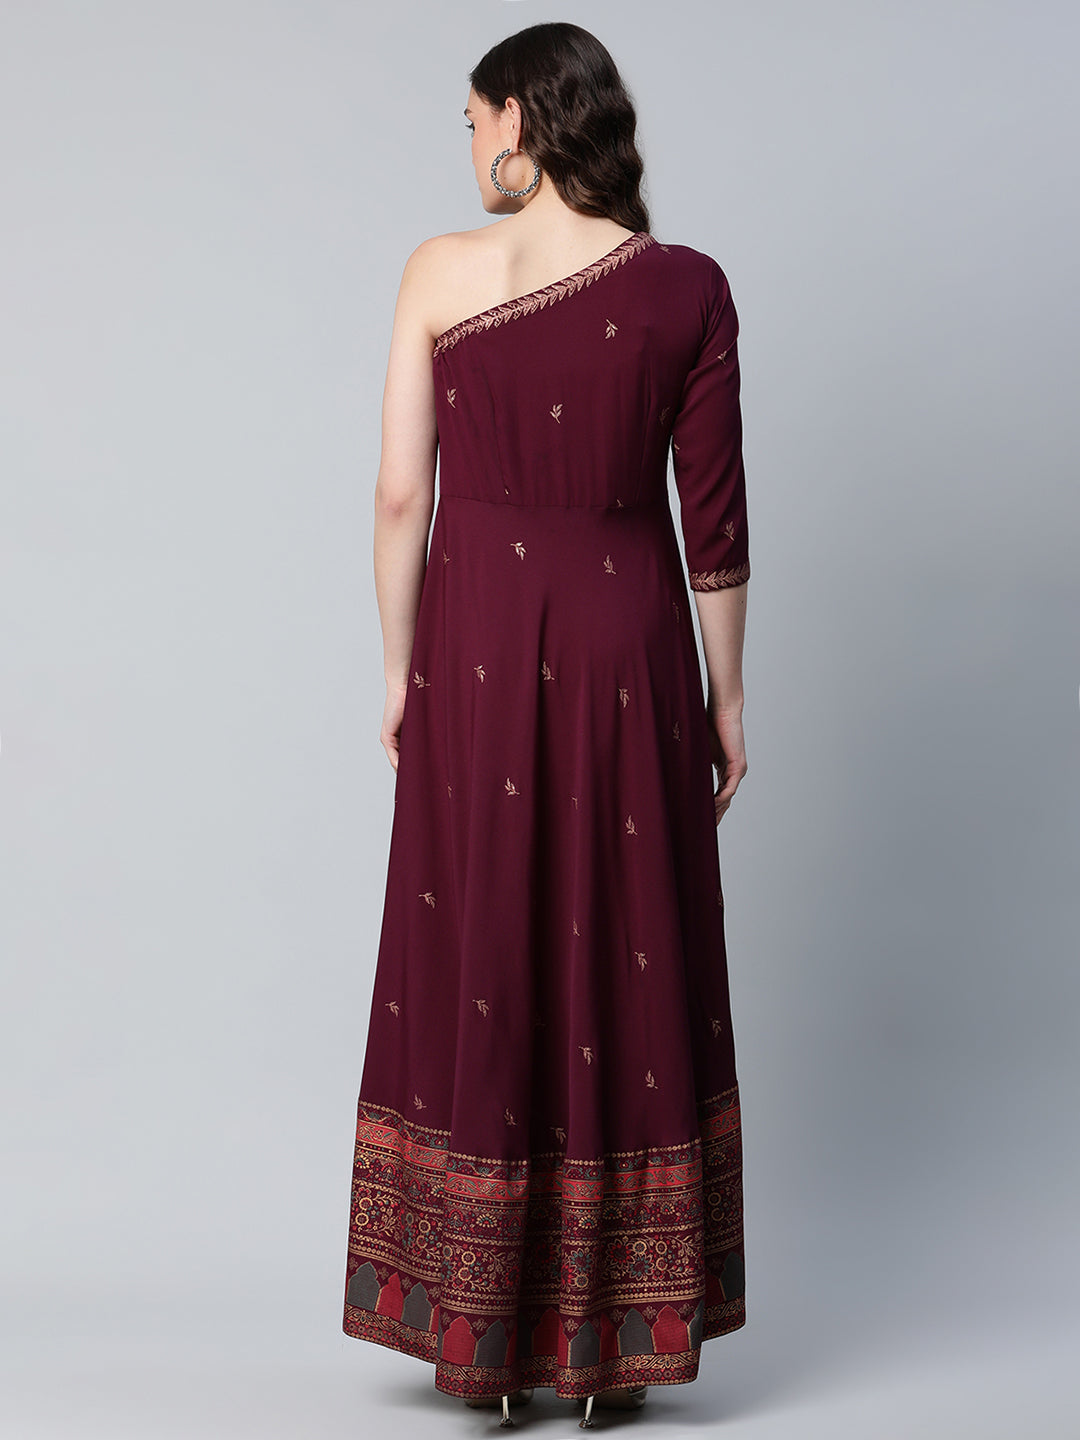 Women's Burgundy & Gold-Toned Ethnic Motifs One Shoulder Ethnic Maxi Dress - Ahalyaa